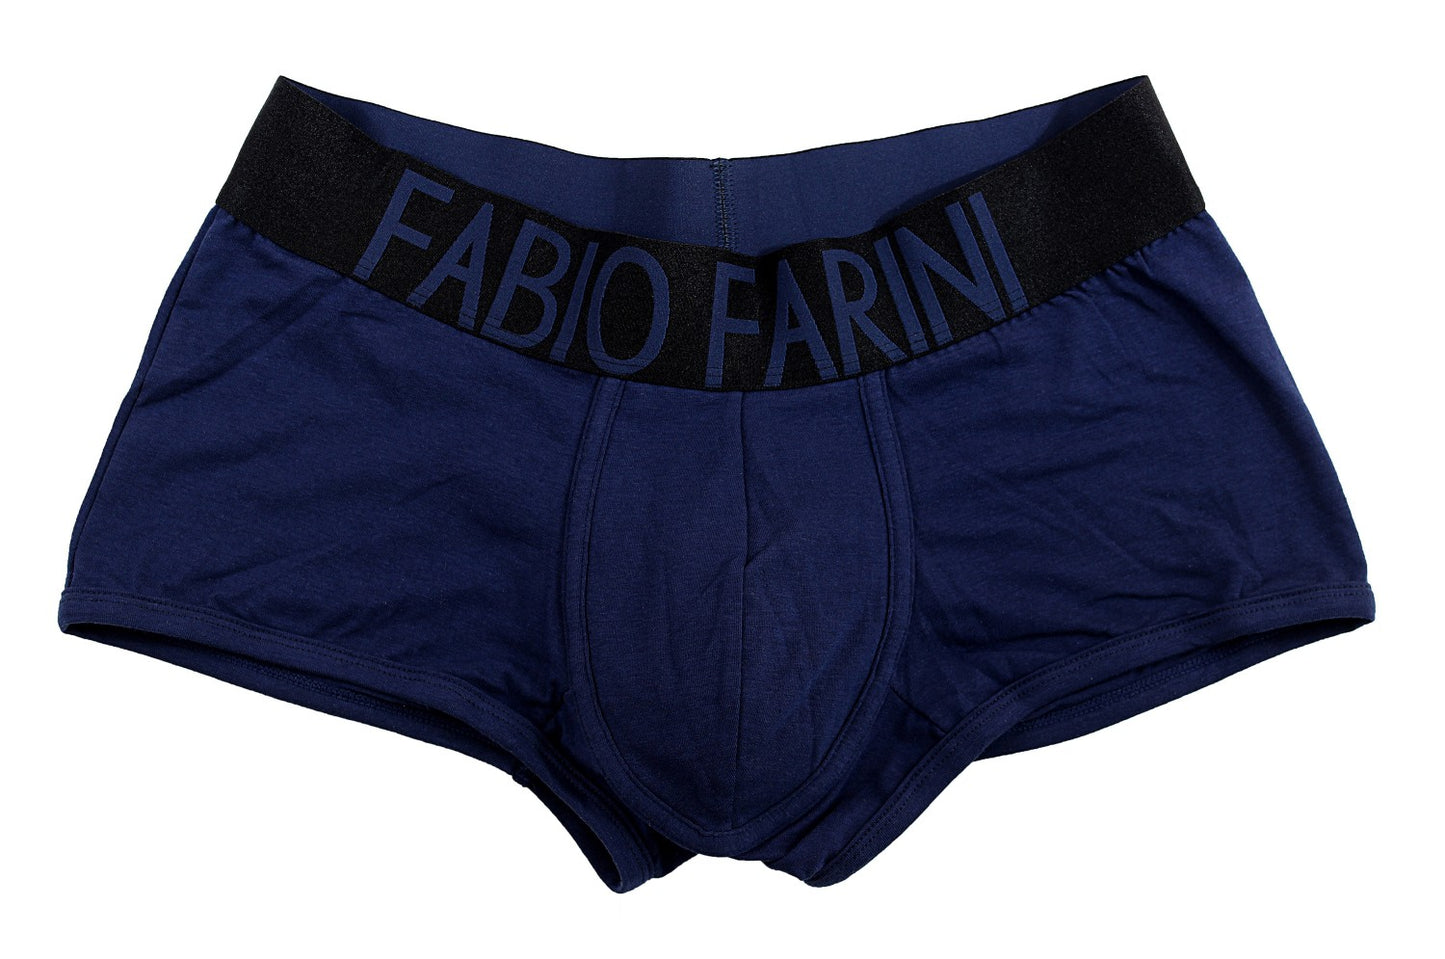 Fabio Farini 4er Pack Herren Boxershorts aus 95% Baumwolle